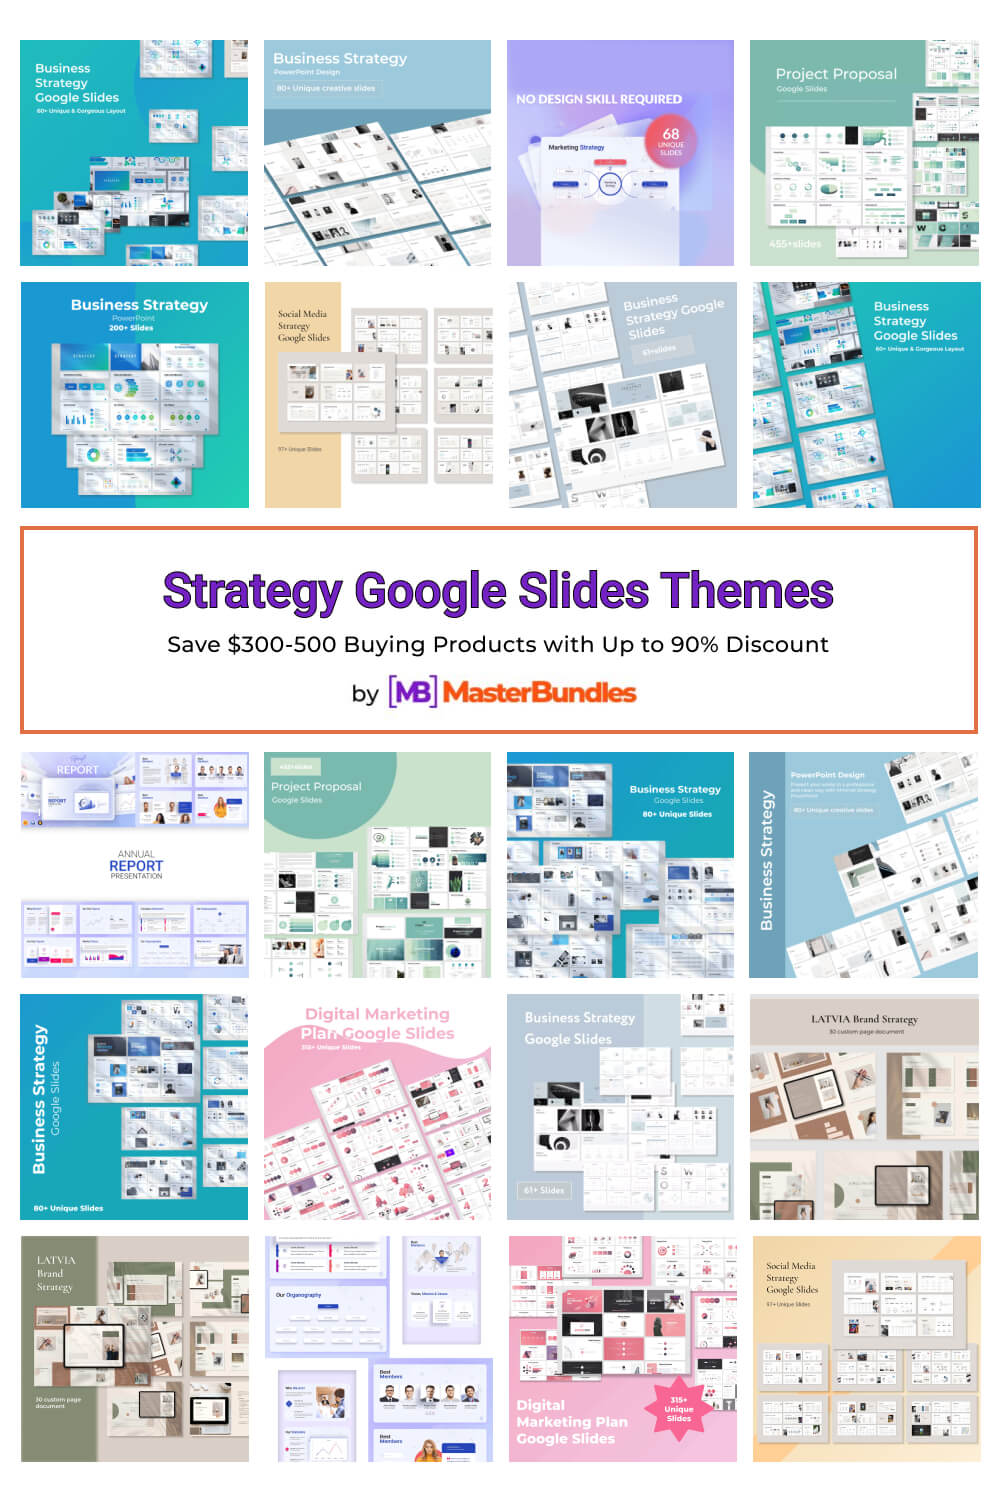 strategy google slides themes pinterest image.